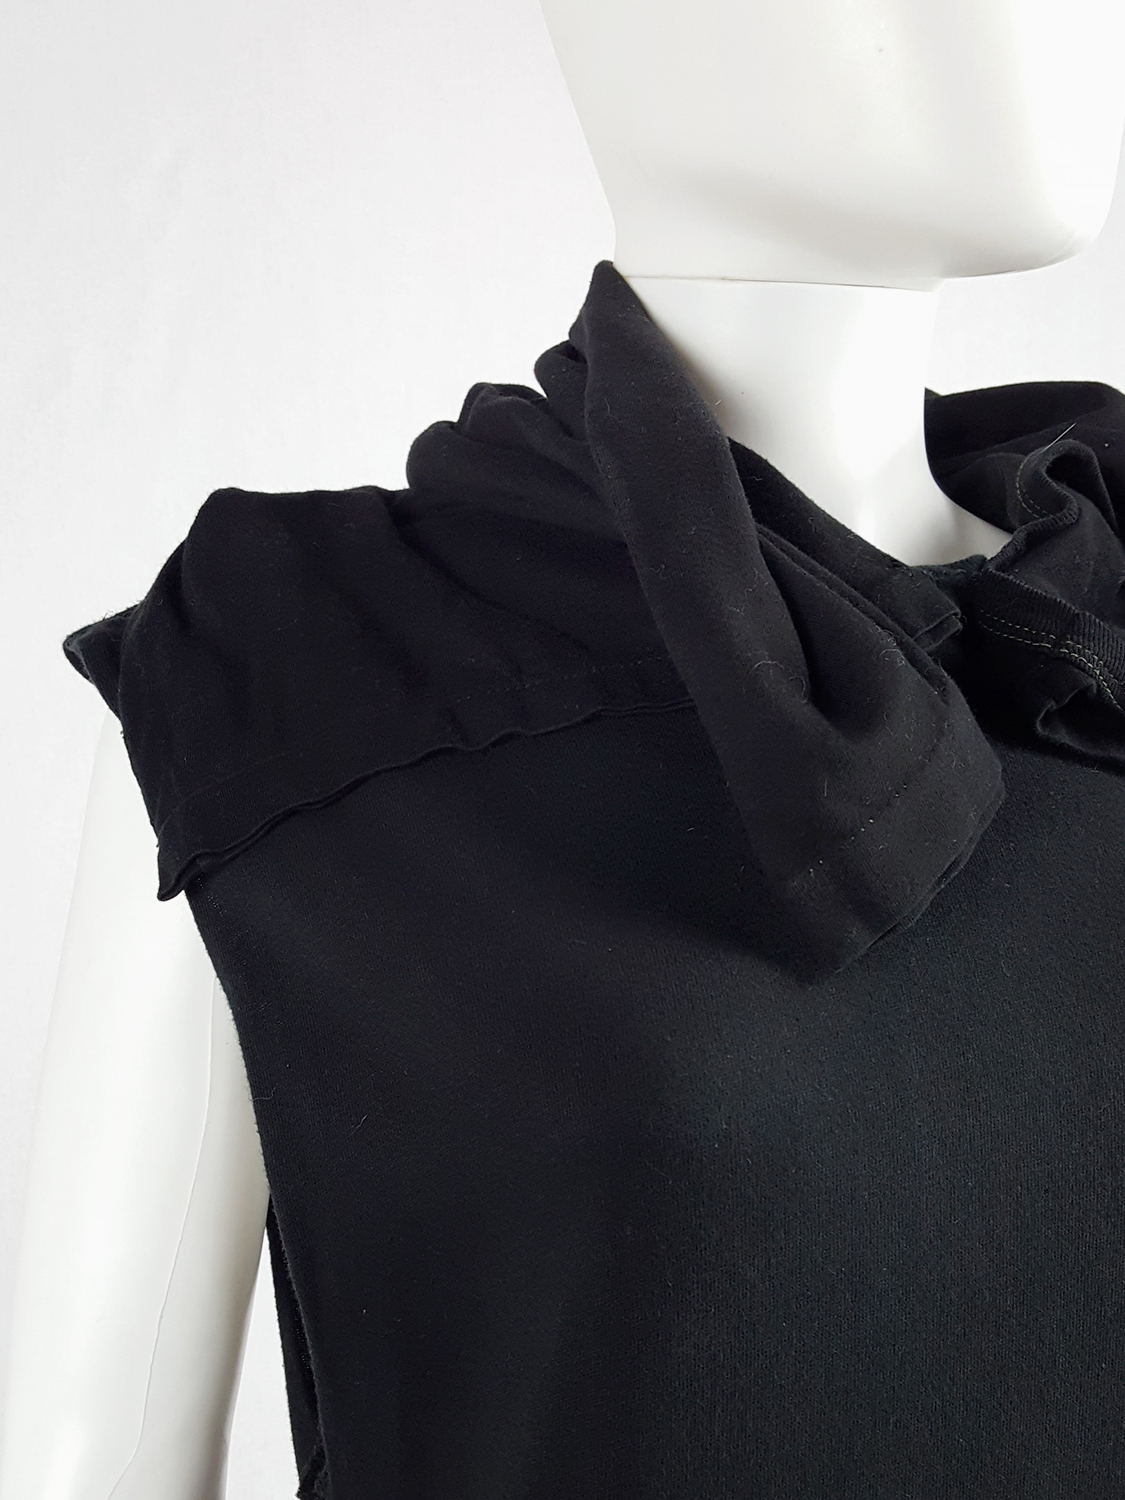 Maison Martin Margiela artisanal black dress with t-shirt collar — fall ...